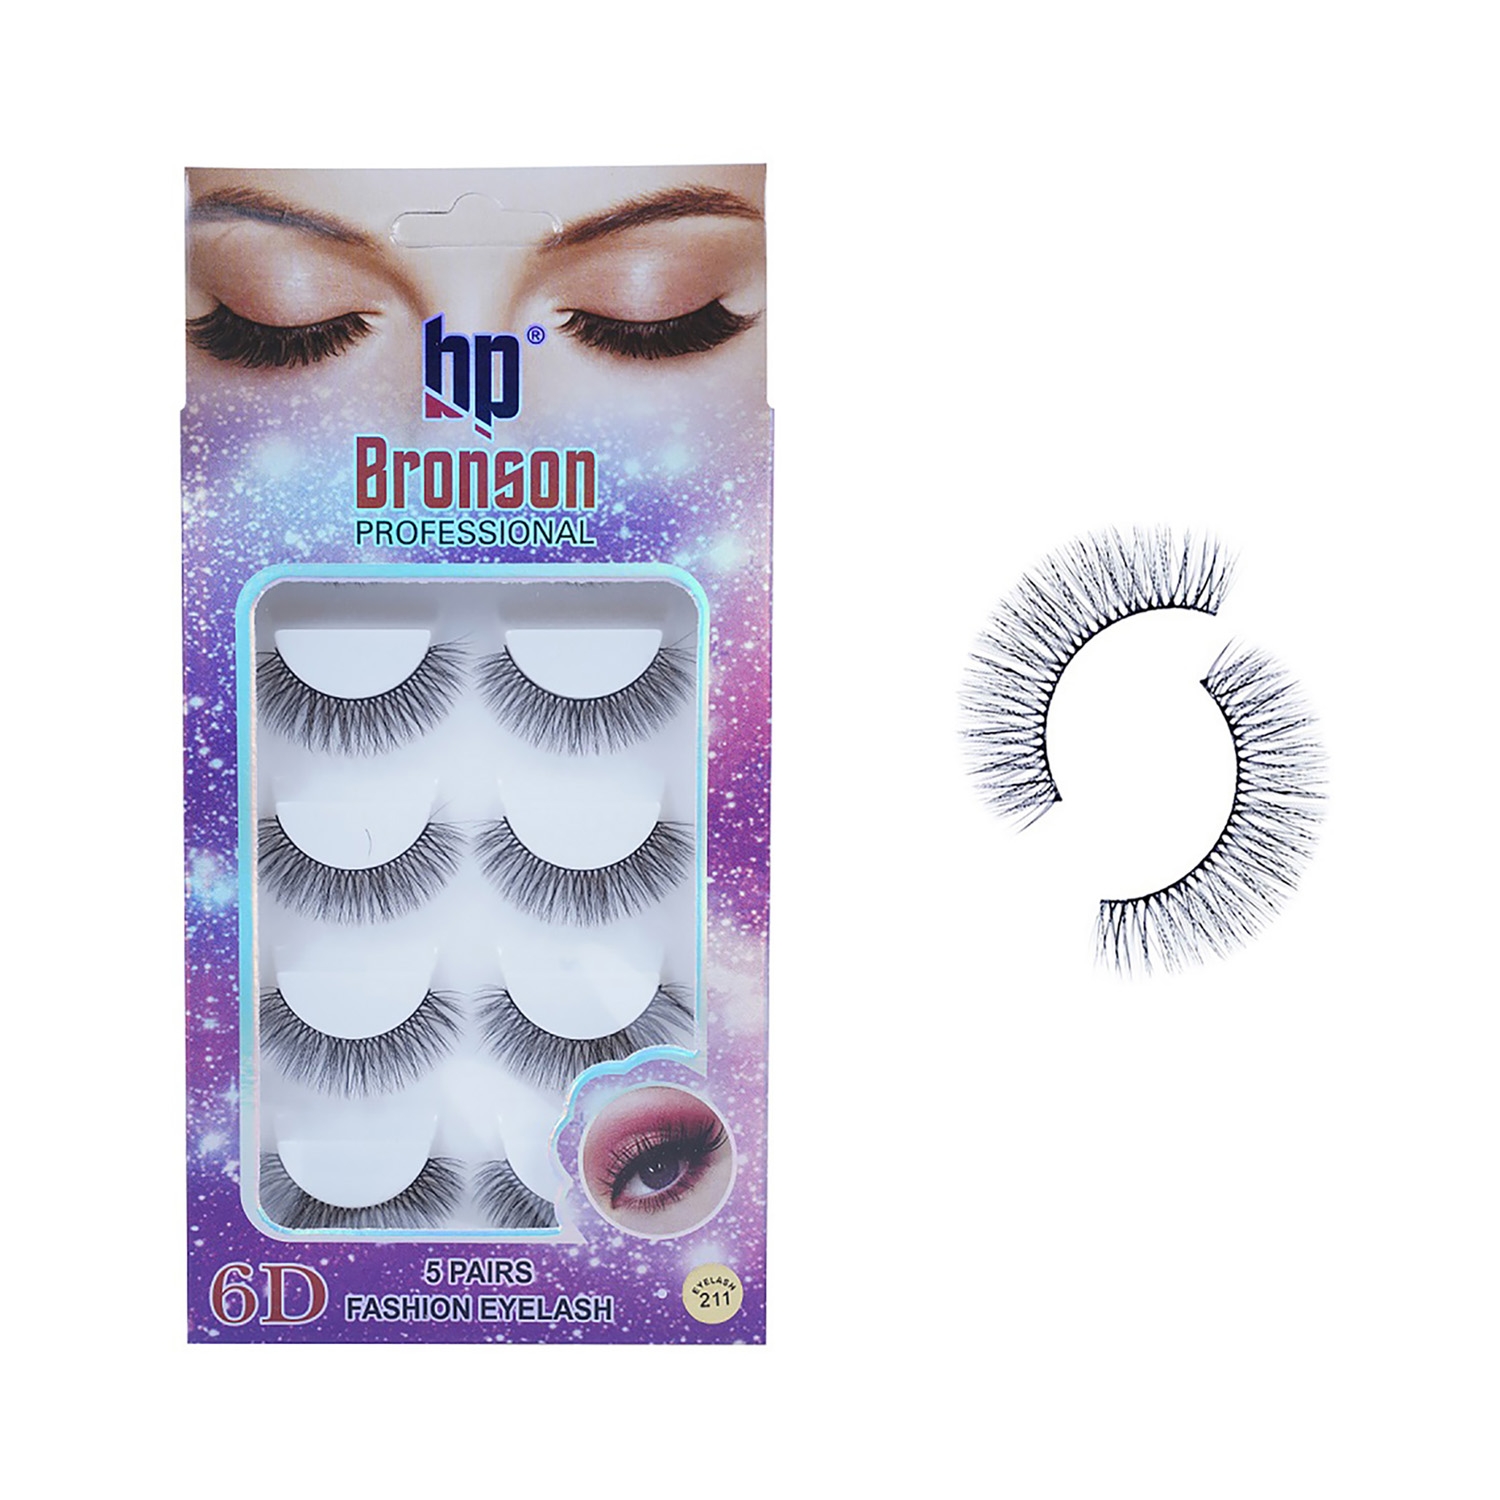 Bronson Professional Pair 6D Long & Natural False Eyelashes - 211 - Black (5 Pairs)